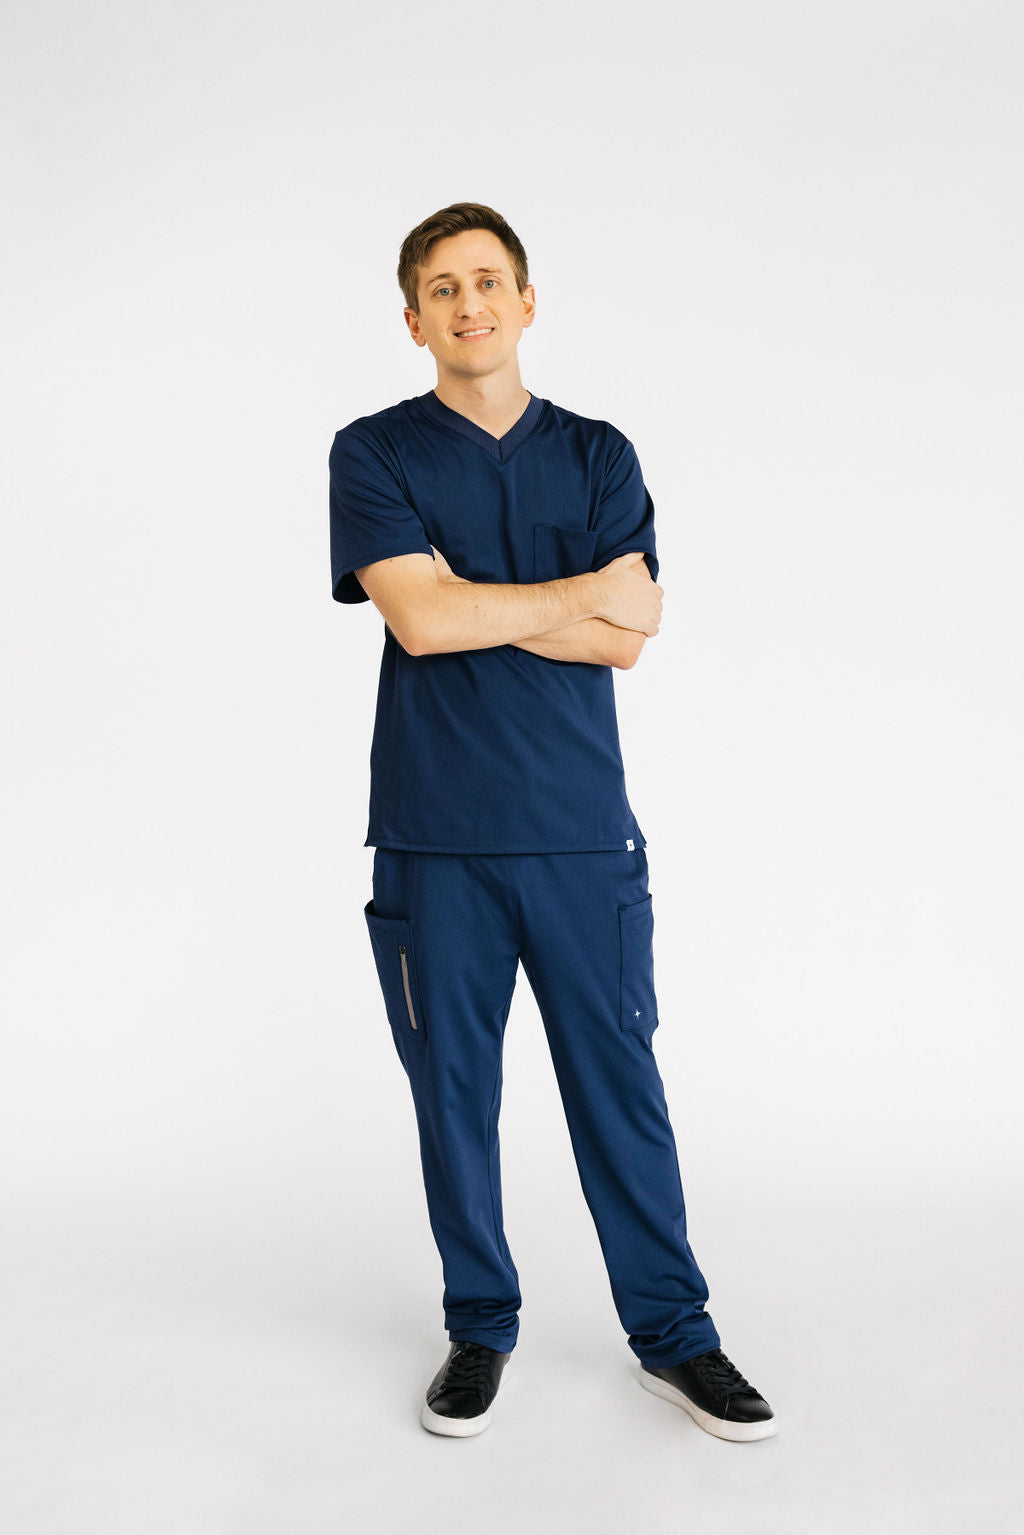 Men's navy blue nursing scrubs